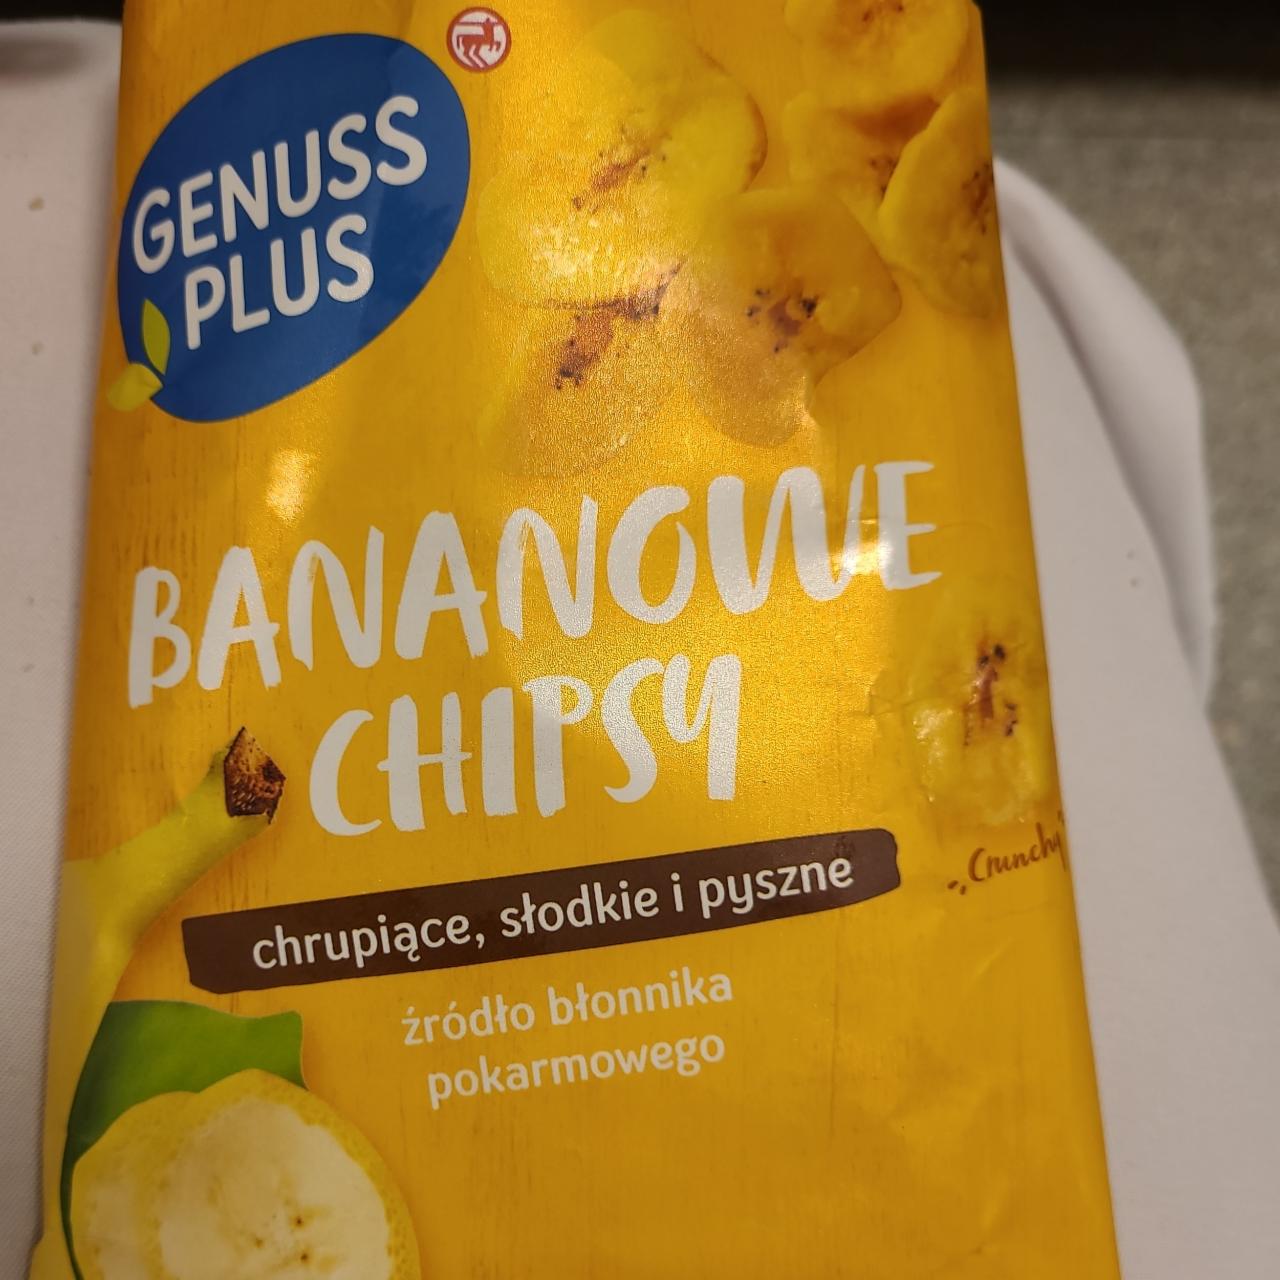 Фото - Банановые чипсы Bananowe Chipsy Genuss Plus